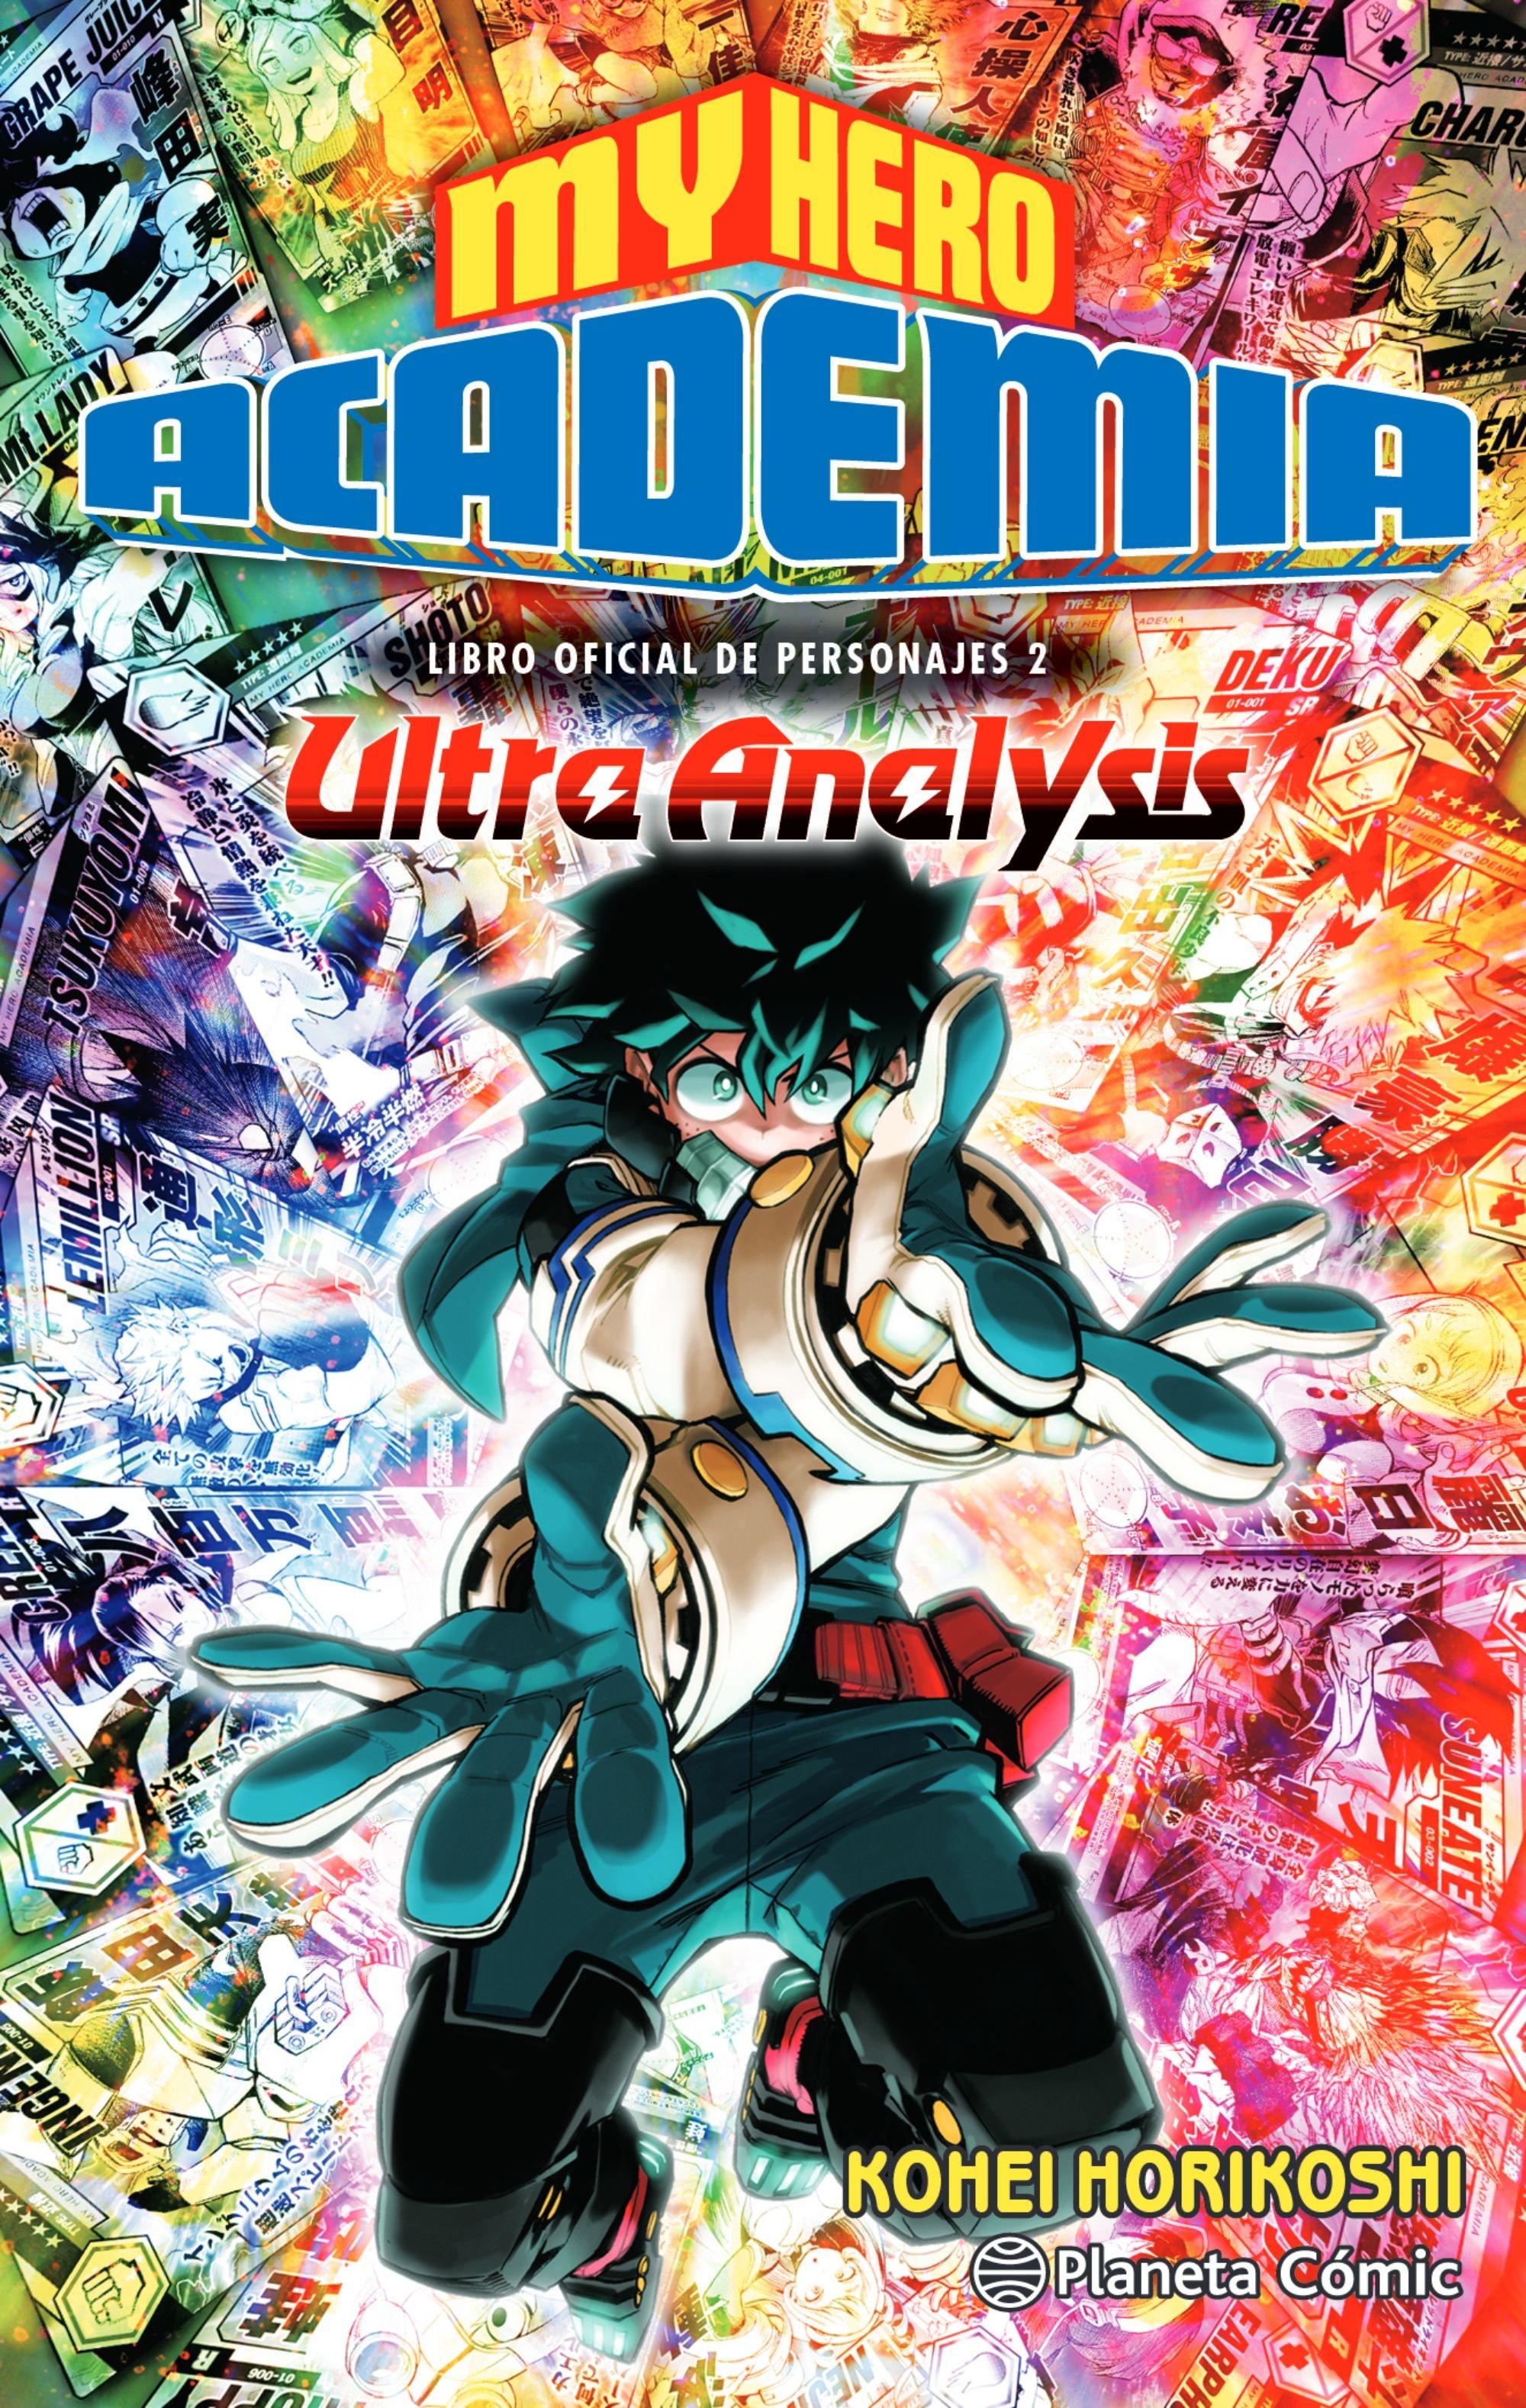 My Hero Academia Ultra Analysis "Libro oficial de personajes 2"